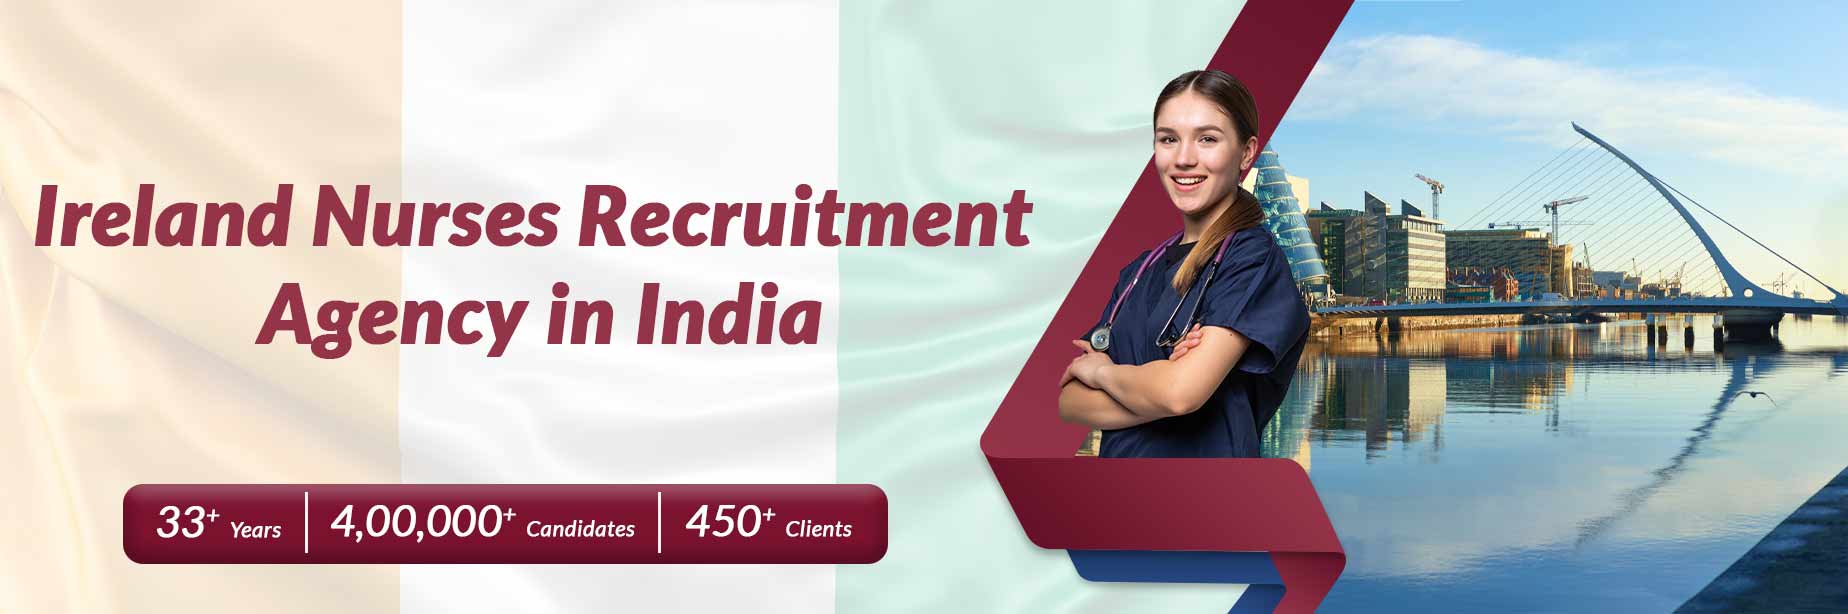 Ireland Nurses Recruitment Agency in India